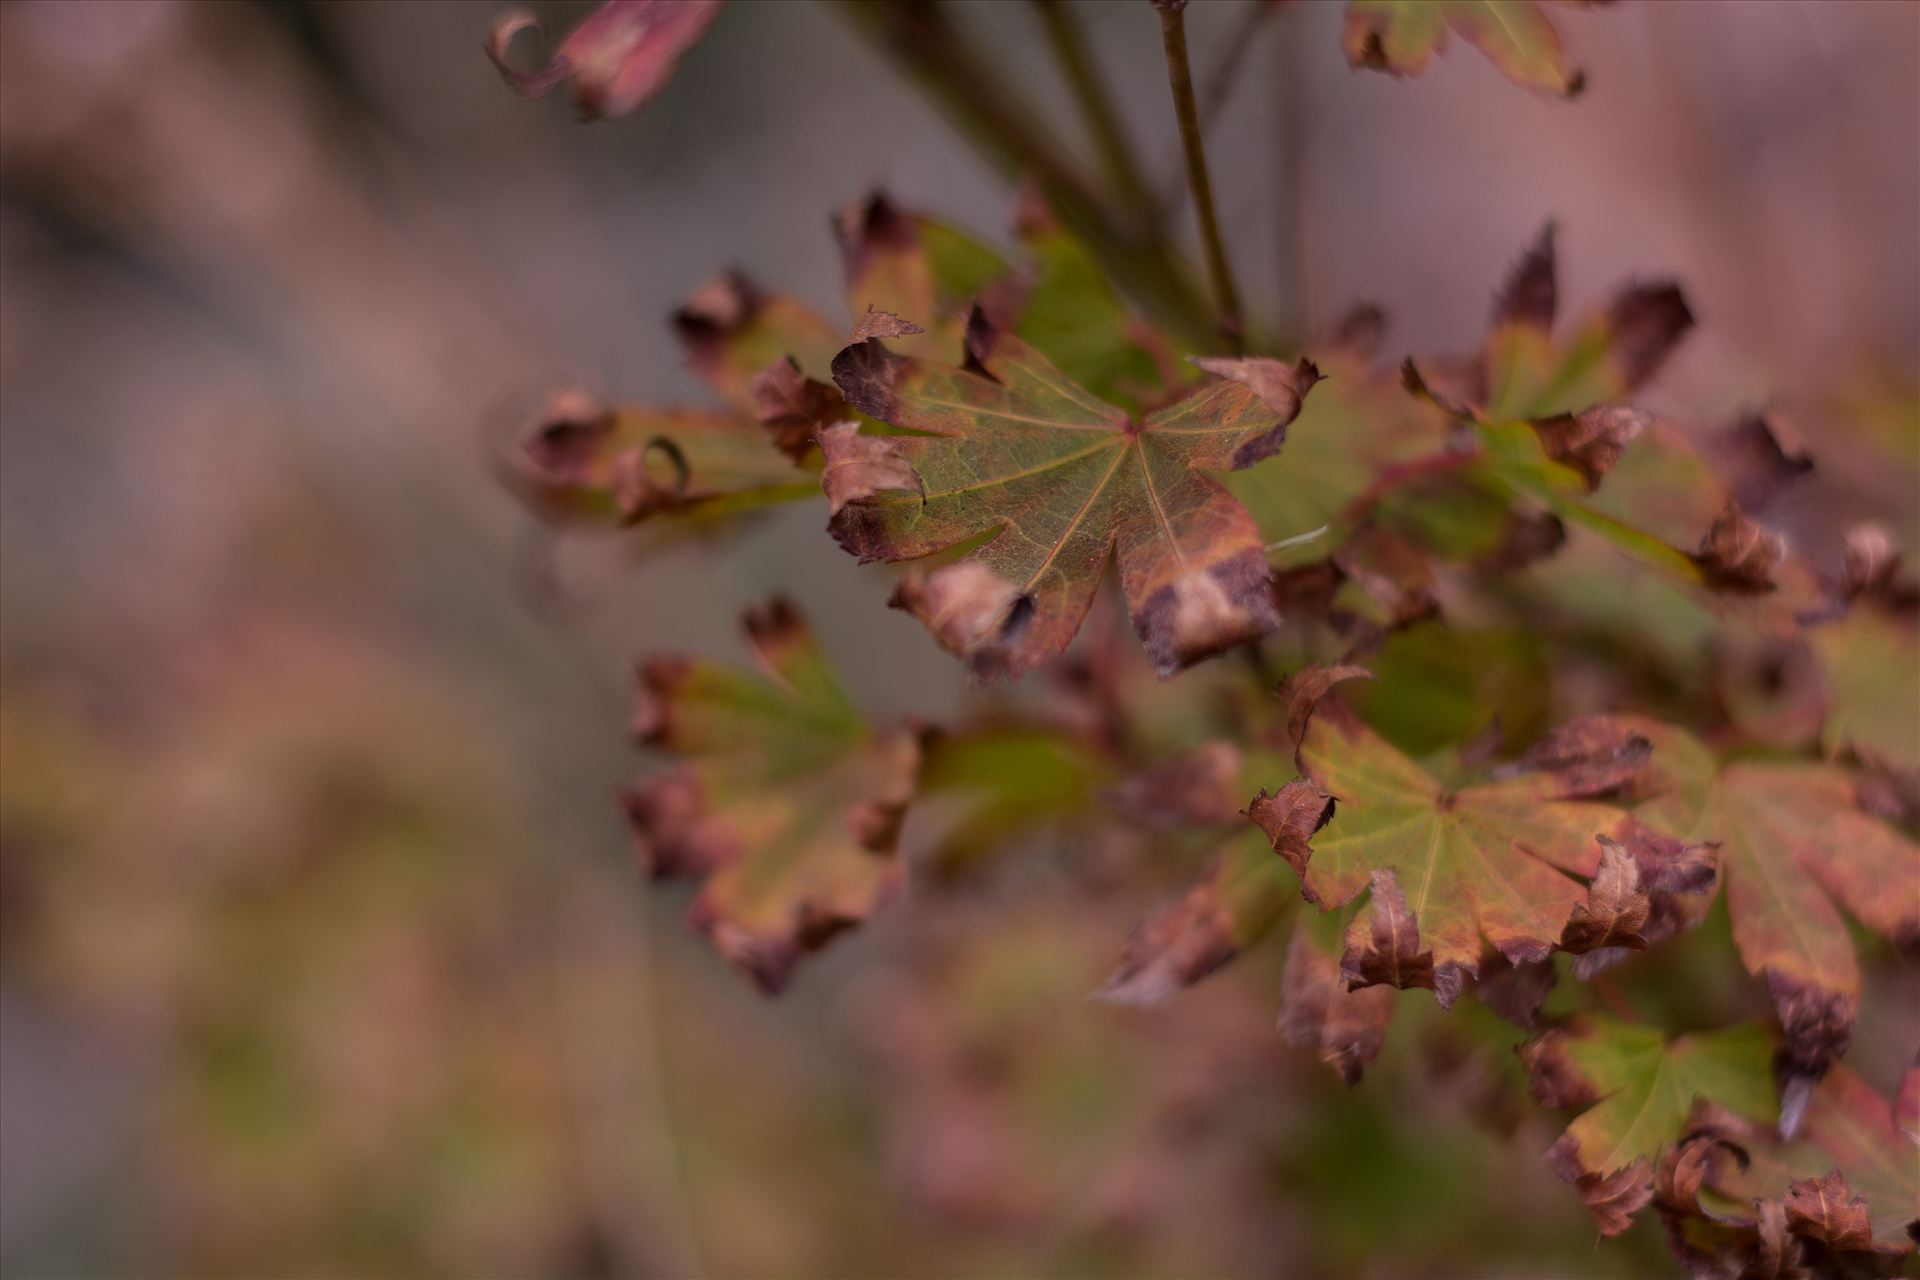 Curled Leaves.jpg  by Sarah Williams